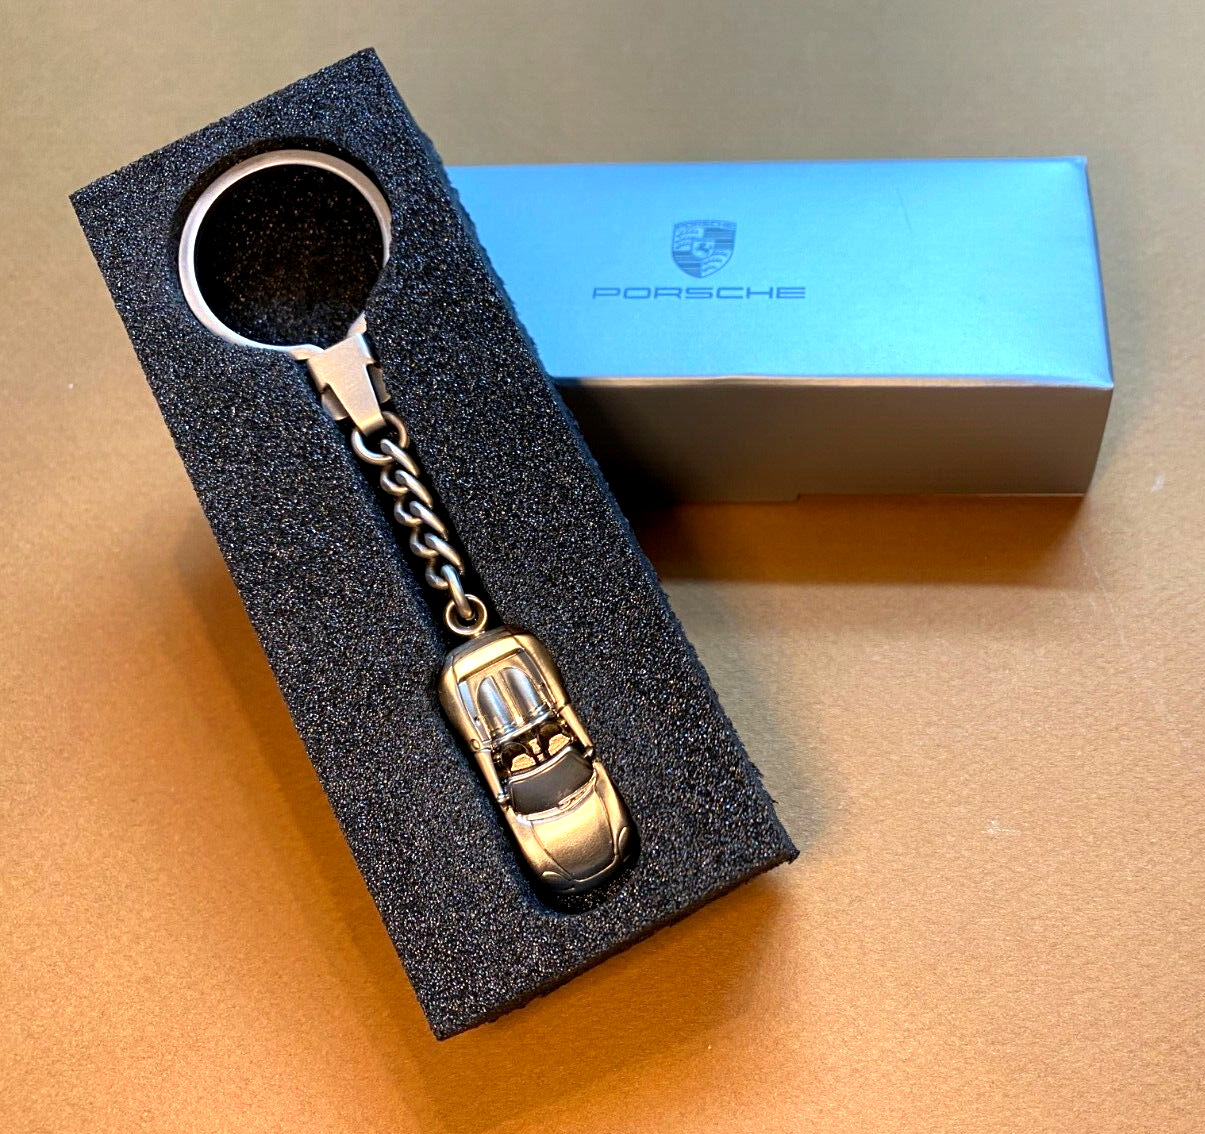 Porsche Carrera GT Keychain Key Ring / Rare 2003 Production Porsche Museum